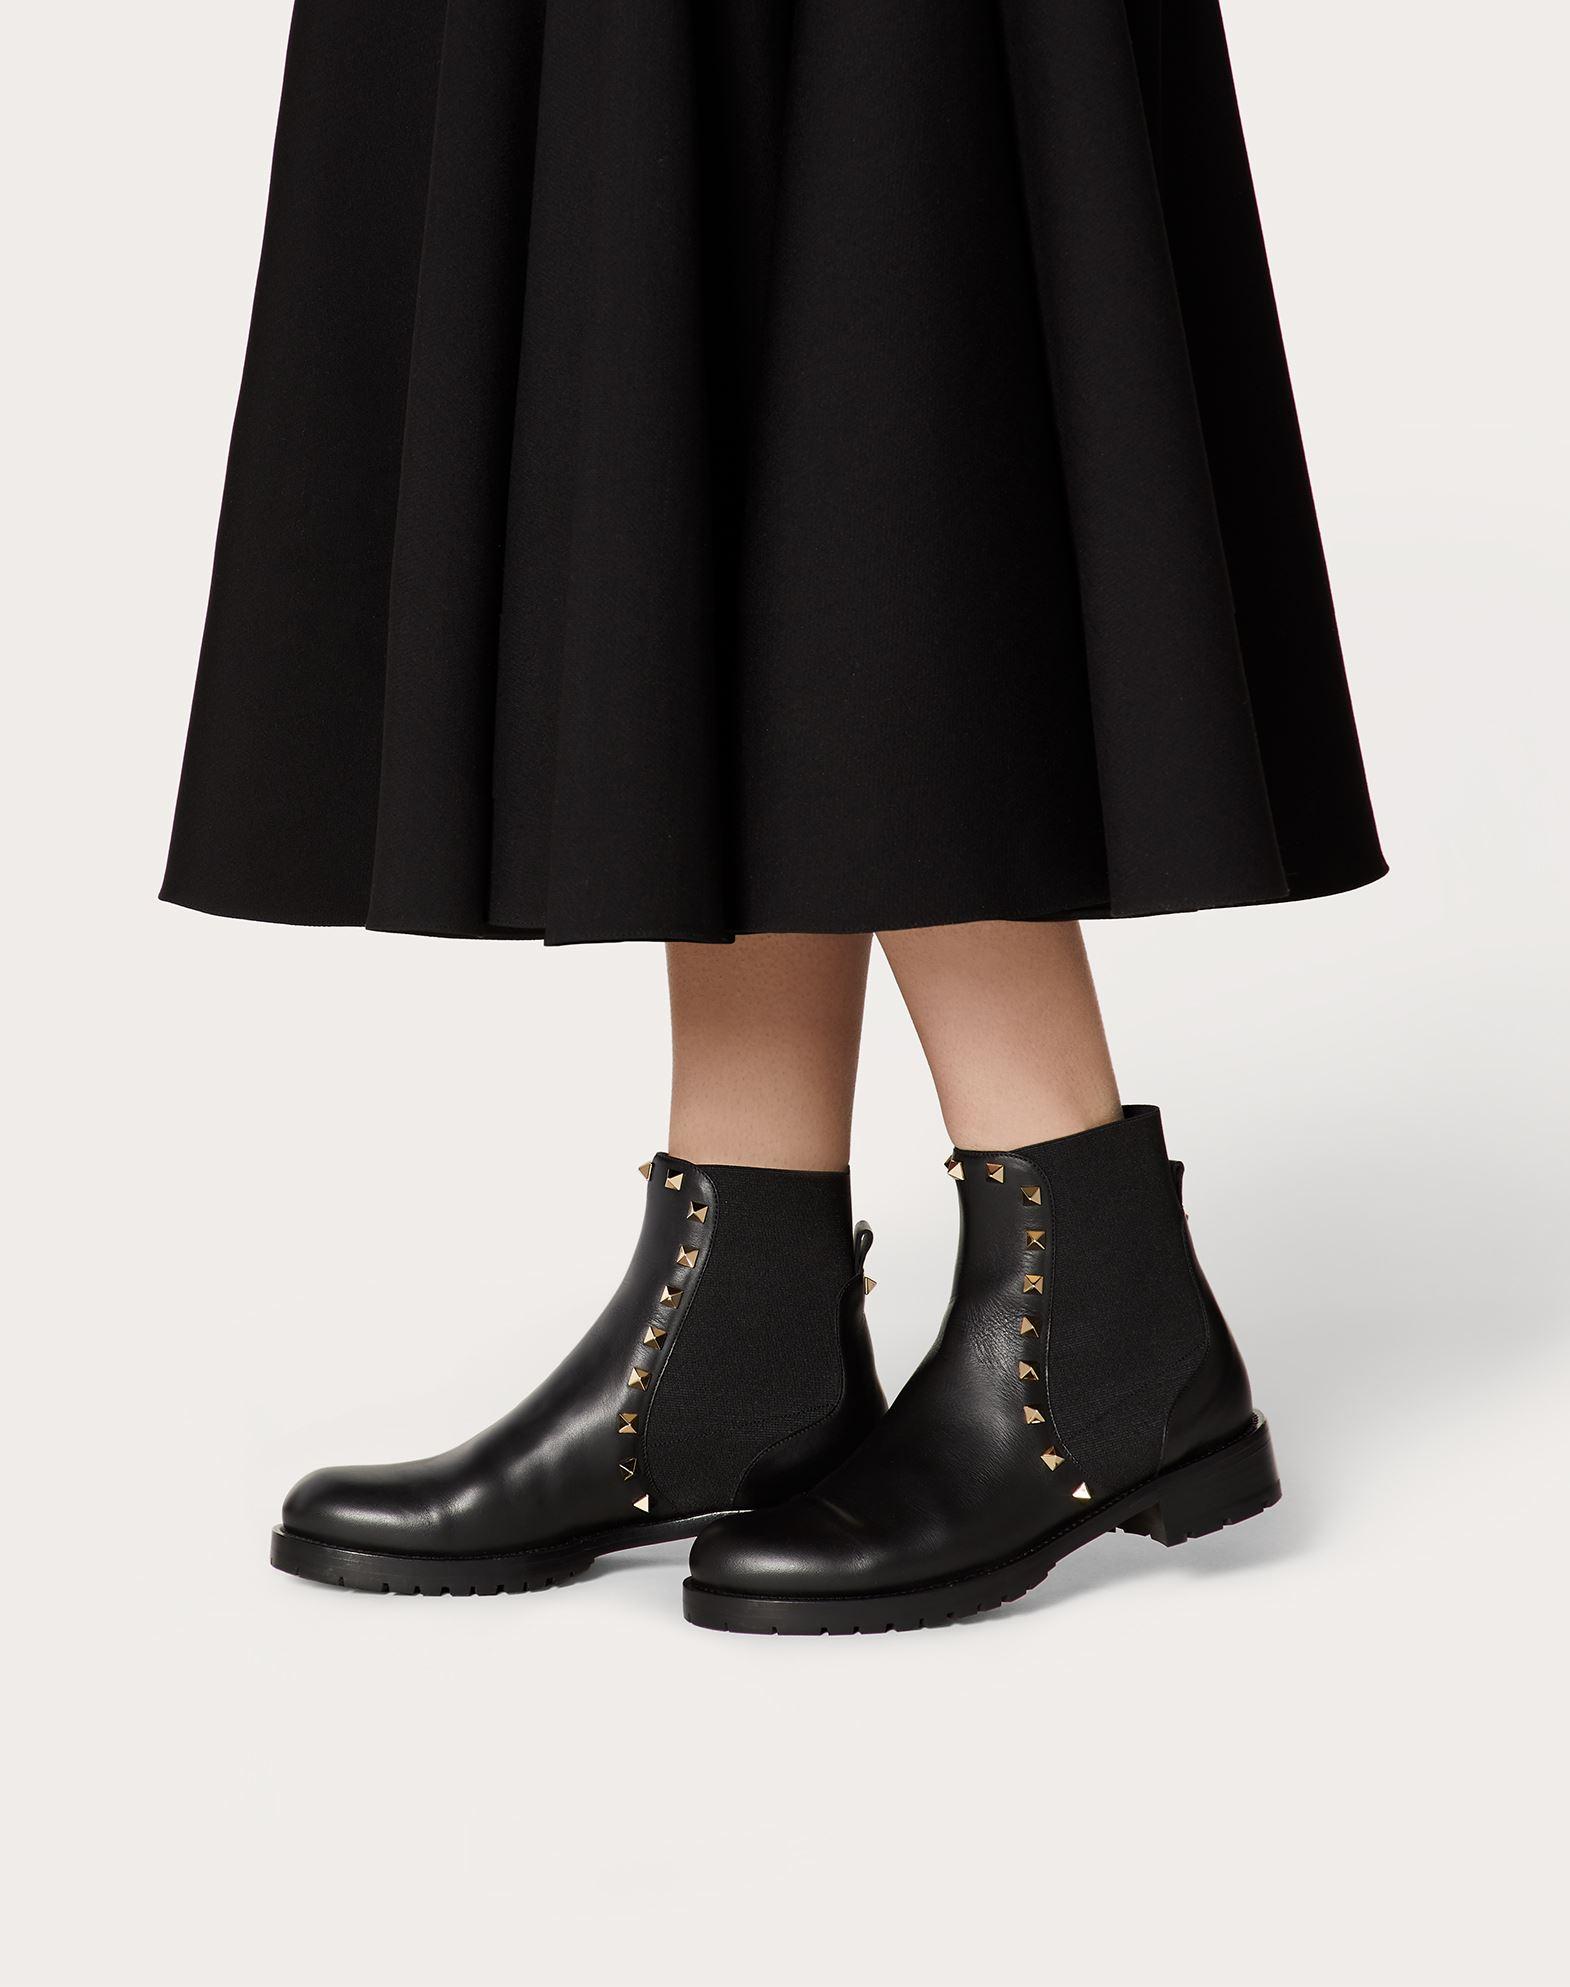 Valentino Garavani Leather Rockstud Chelsea Boots in Black - Save 54% - Lyst